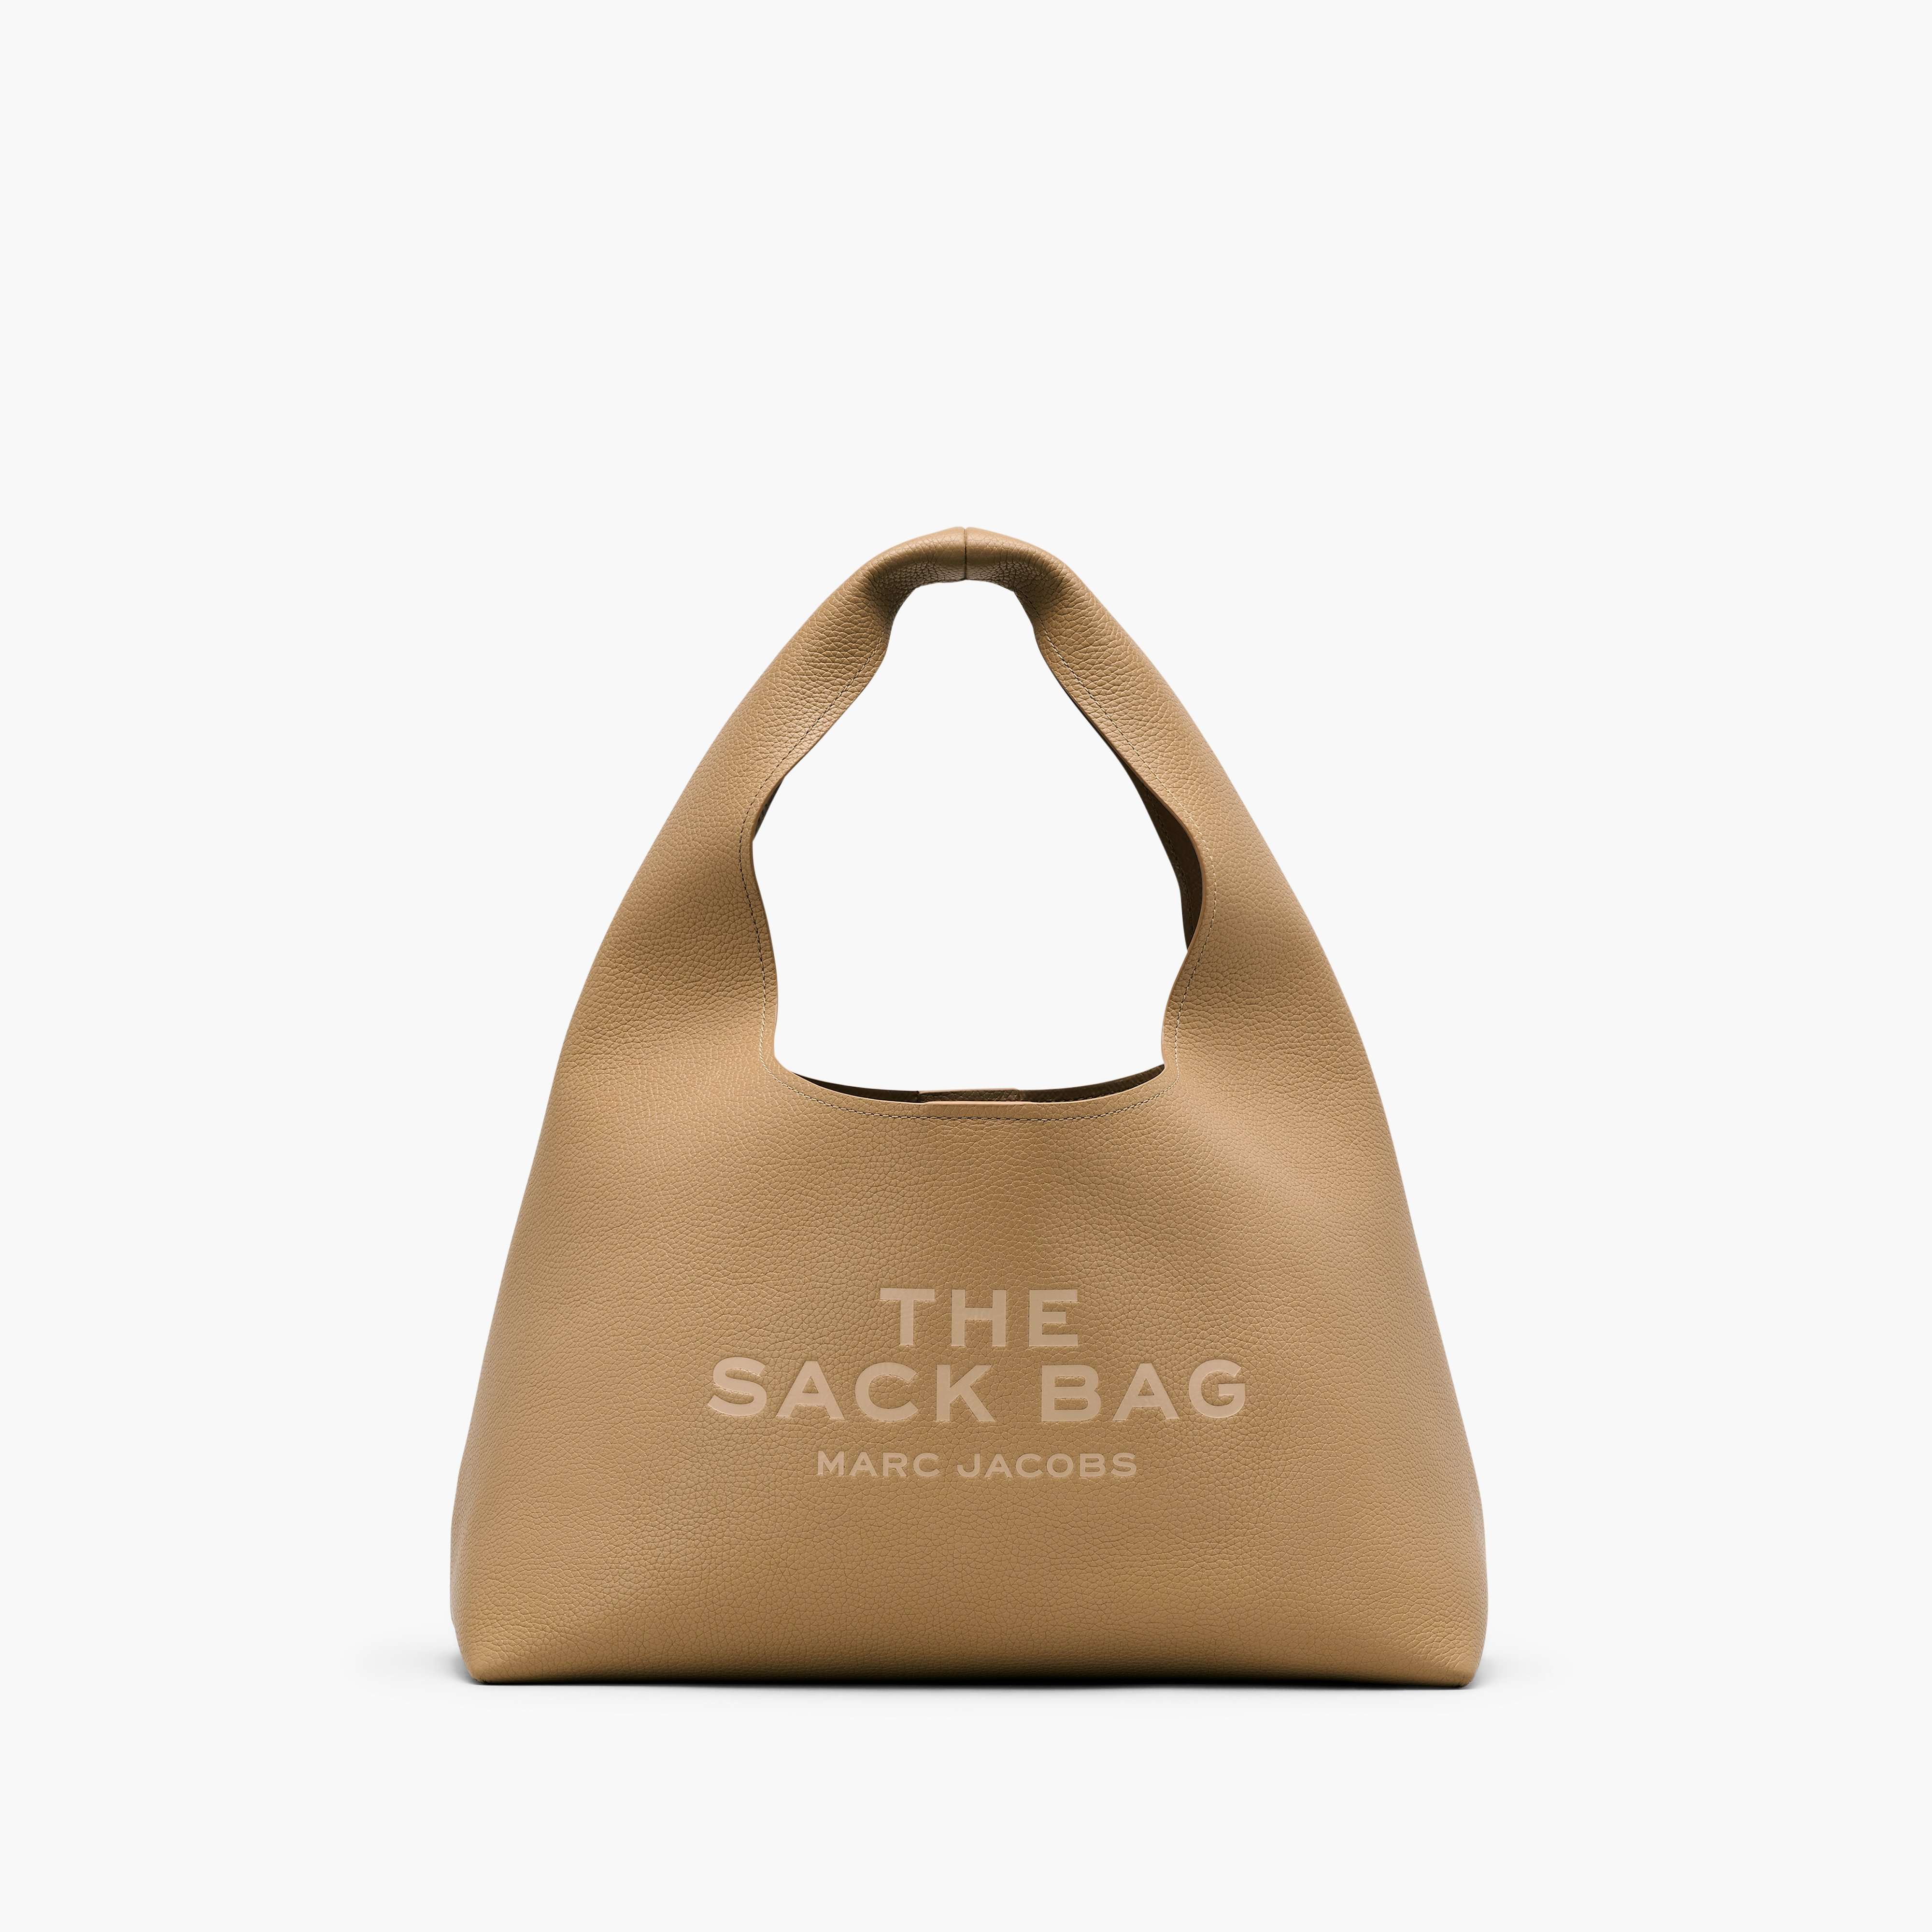 The Sack Bag in Camel